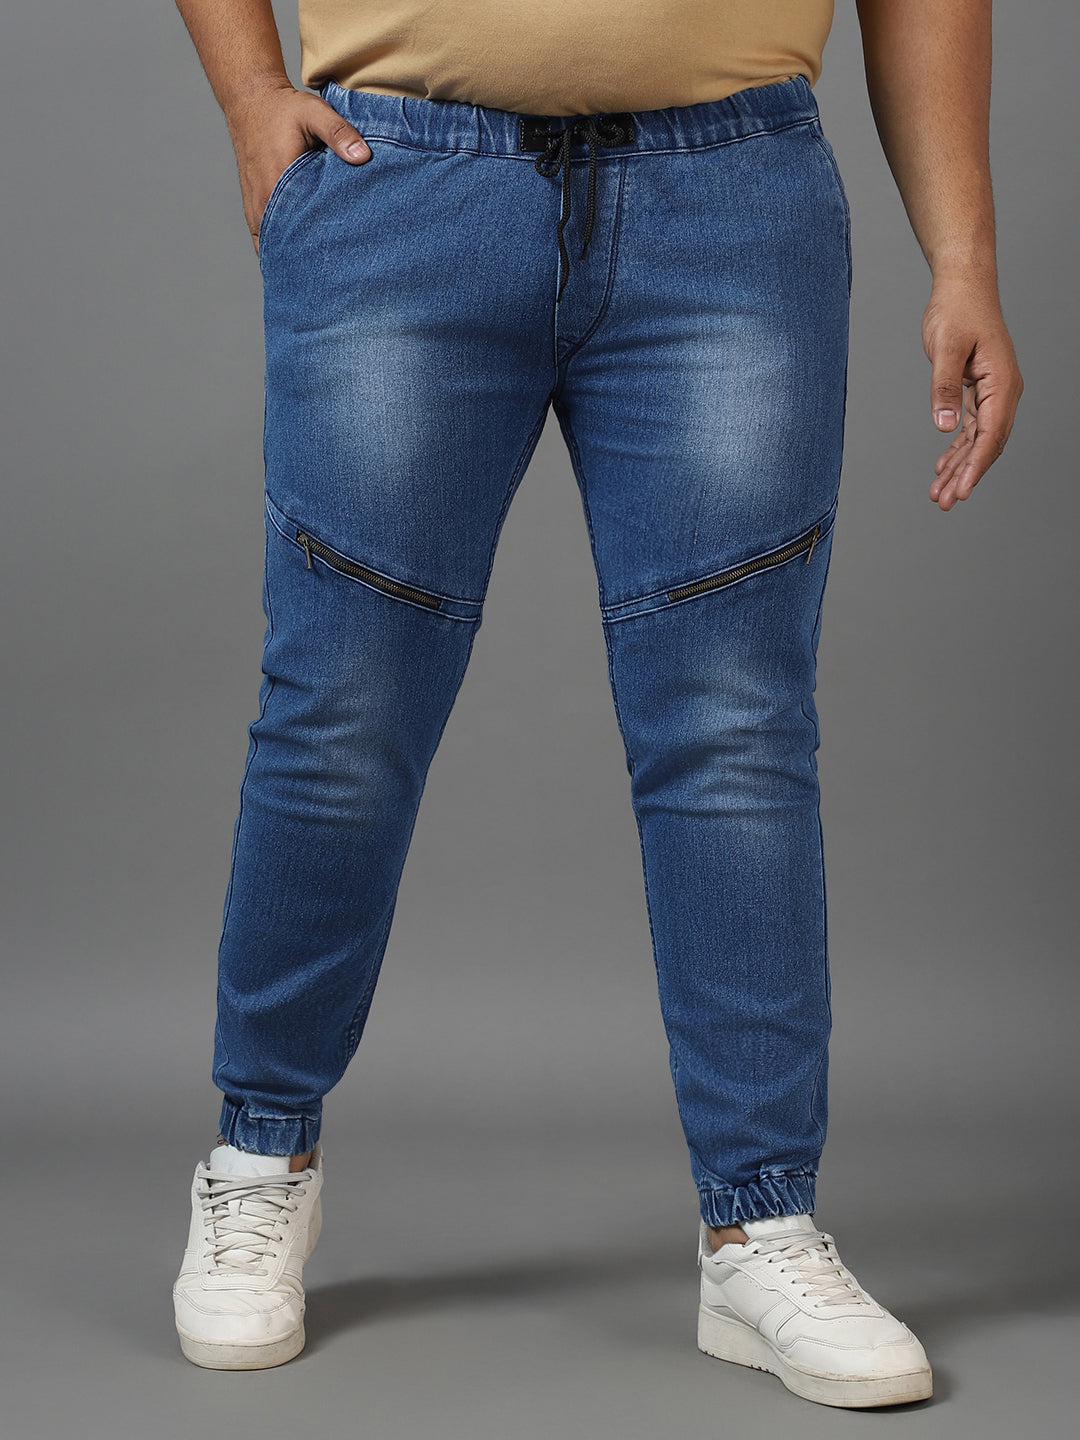 Urbano Plus Men's Blue Regular Fit Zippered Jogger Jeans Stretch